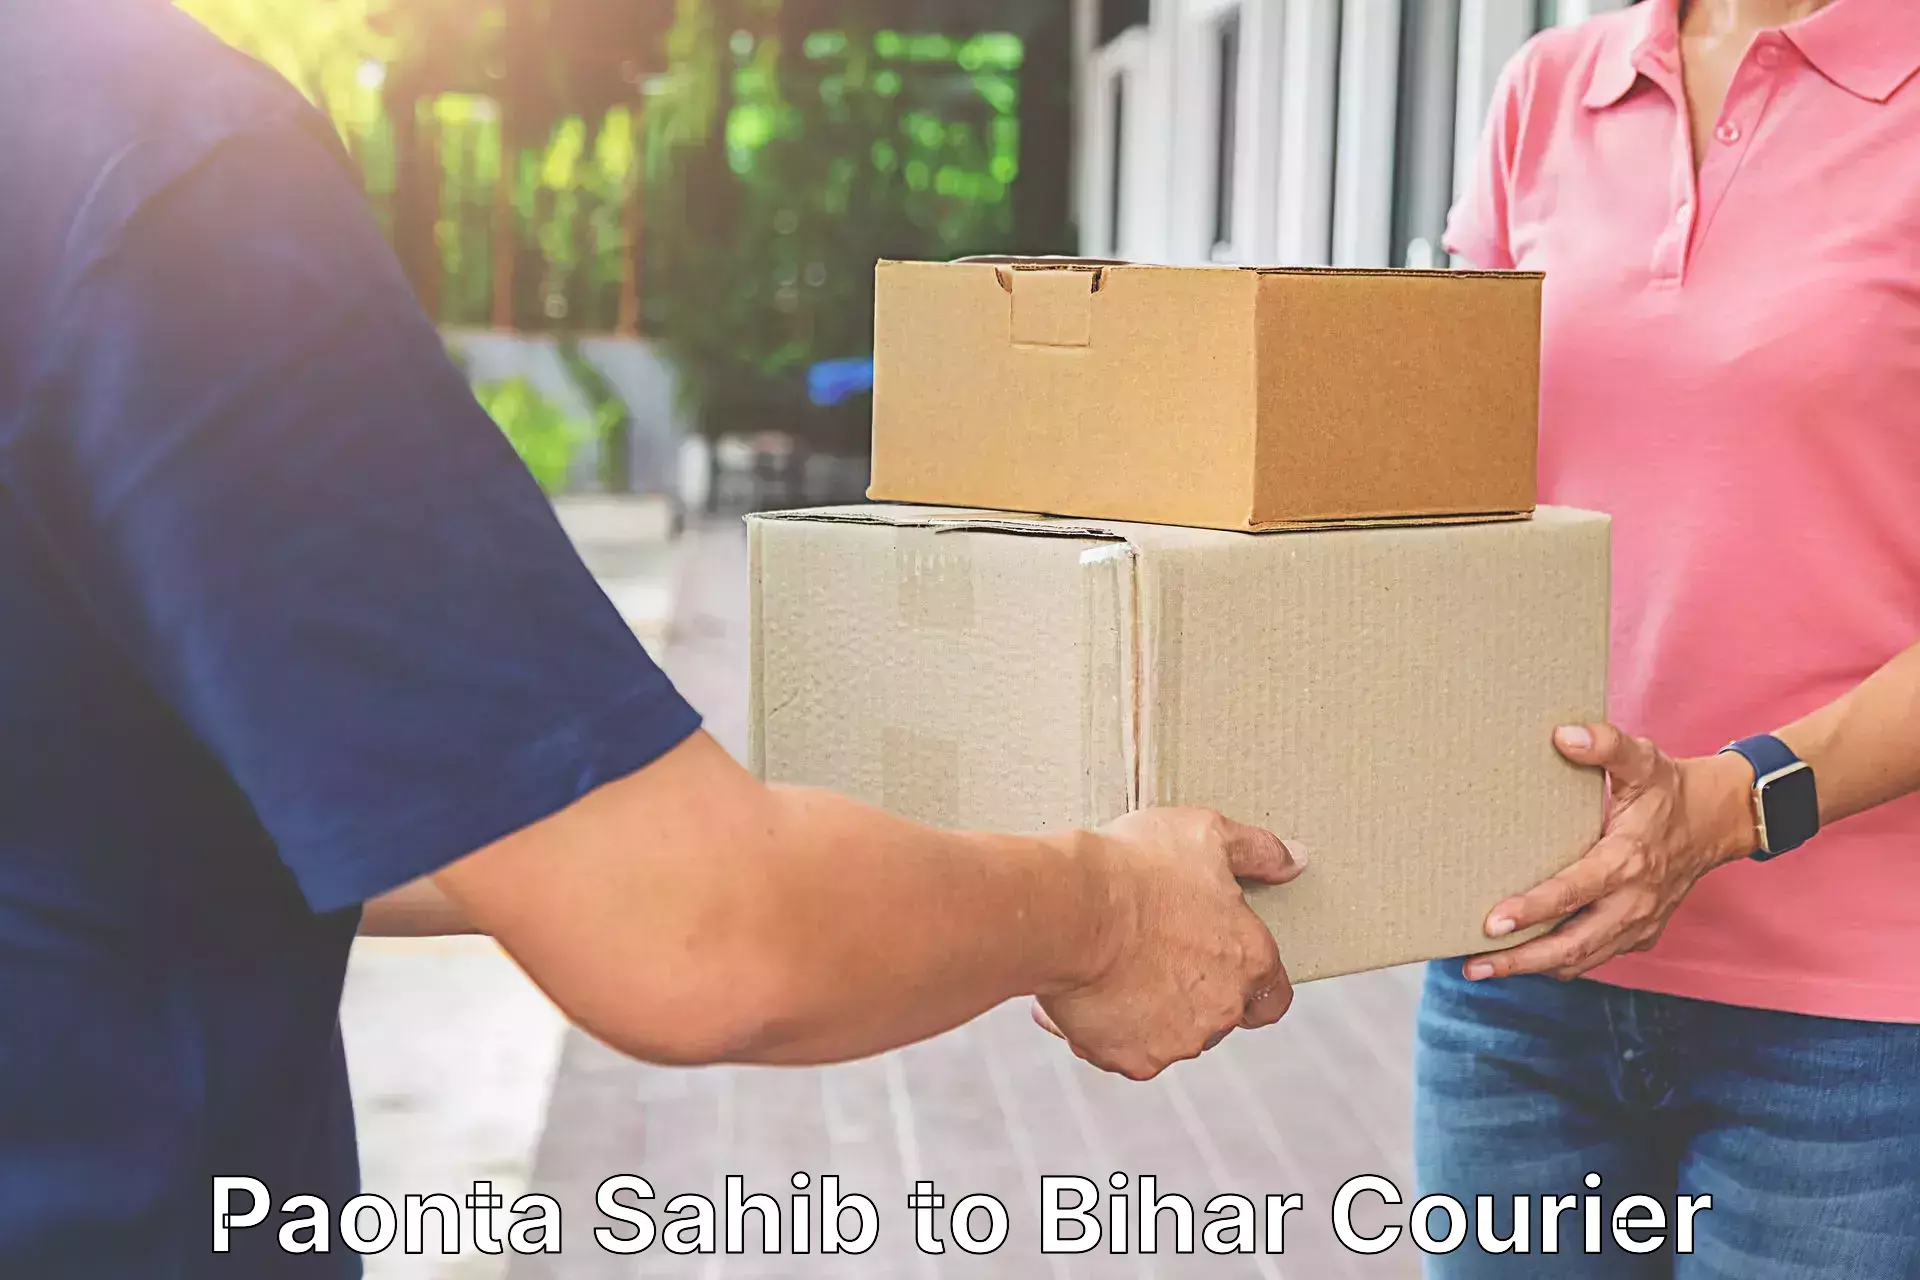 Reliable delivery network Paonta Sahib to Katihar